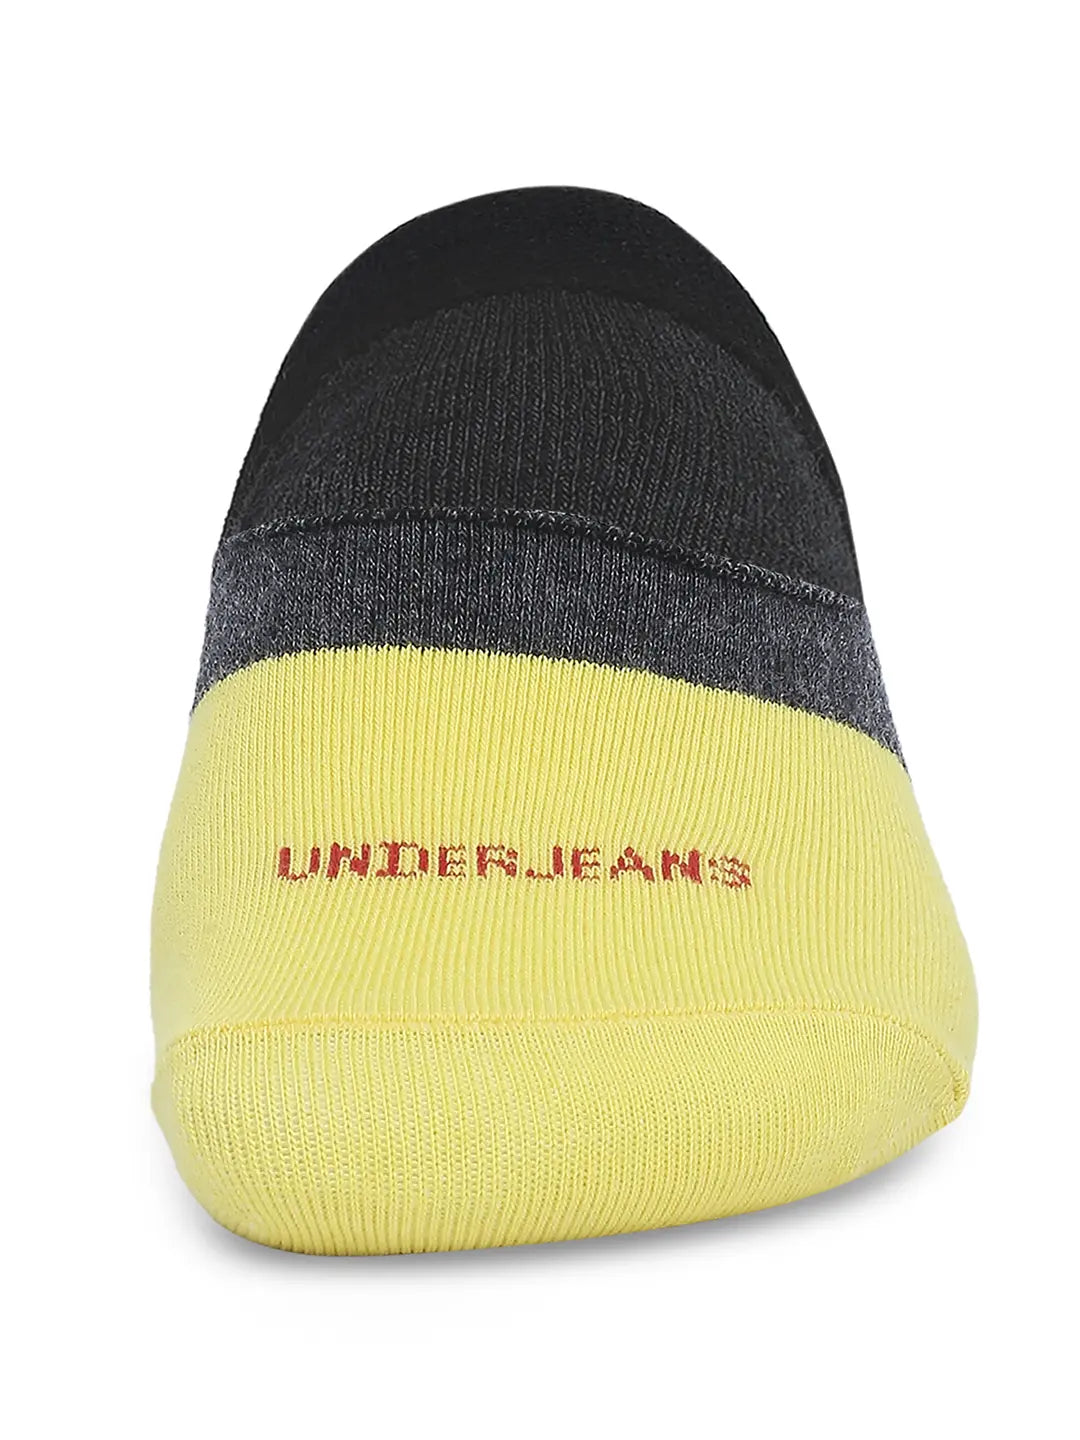 Underjeans By Spykar Men Grey Melange & Yellow Cotton Blend No Show Socks - Pack Of 2